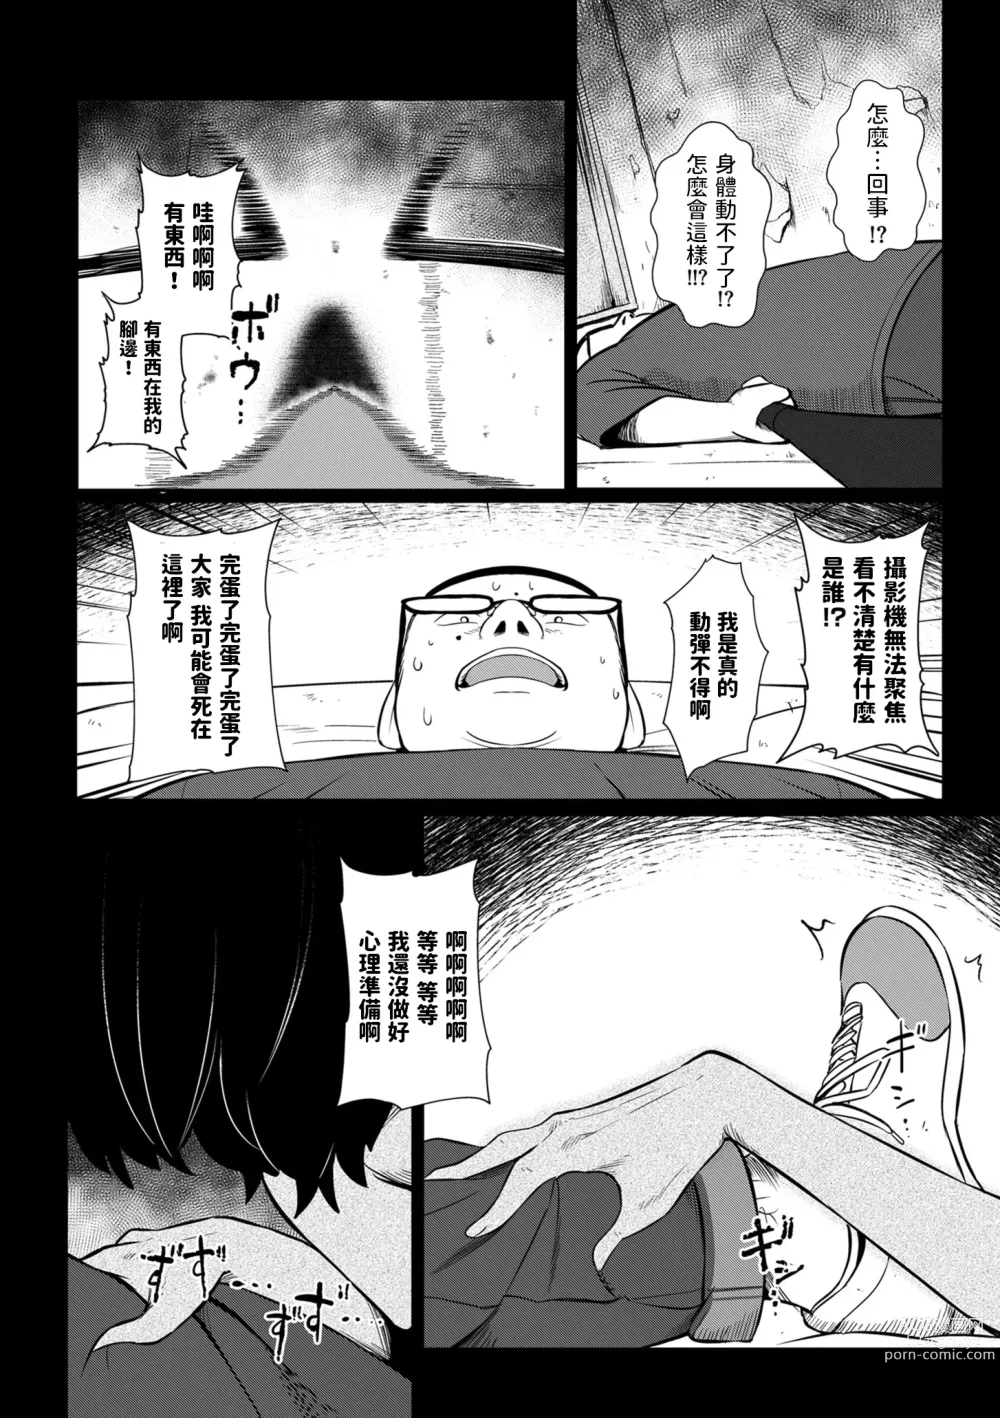 Page 6 of manga Noriko-san wa Maji!